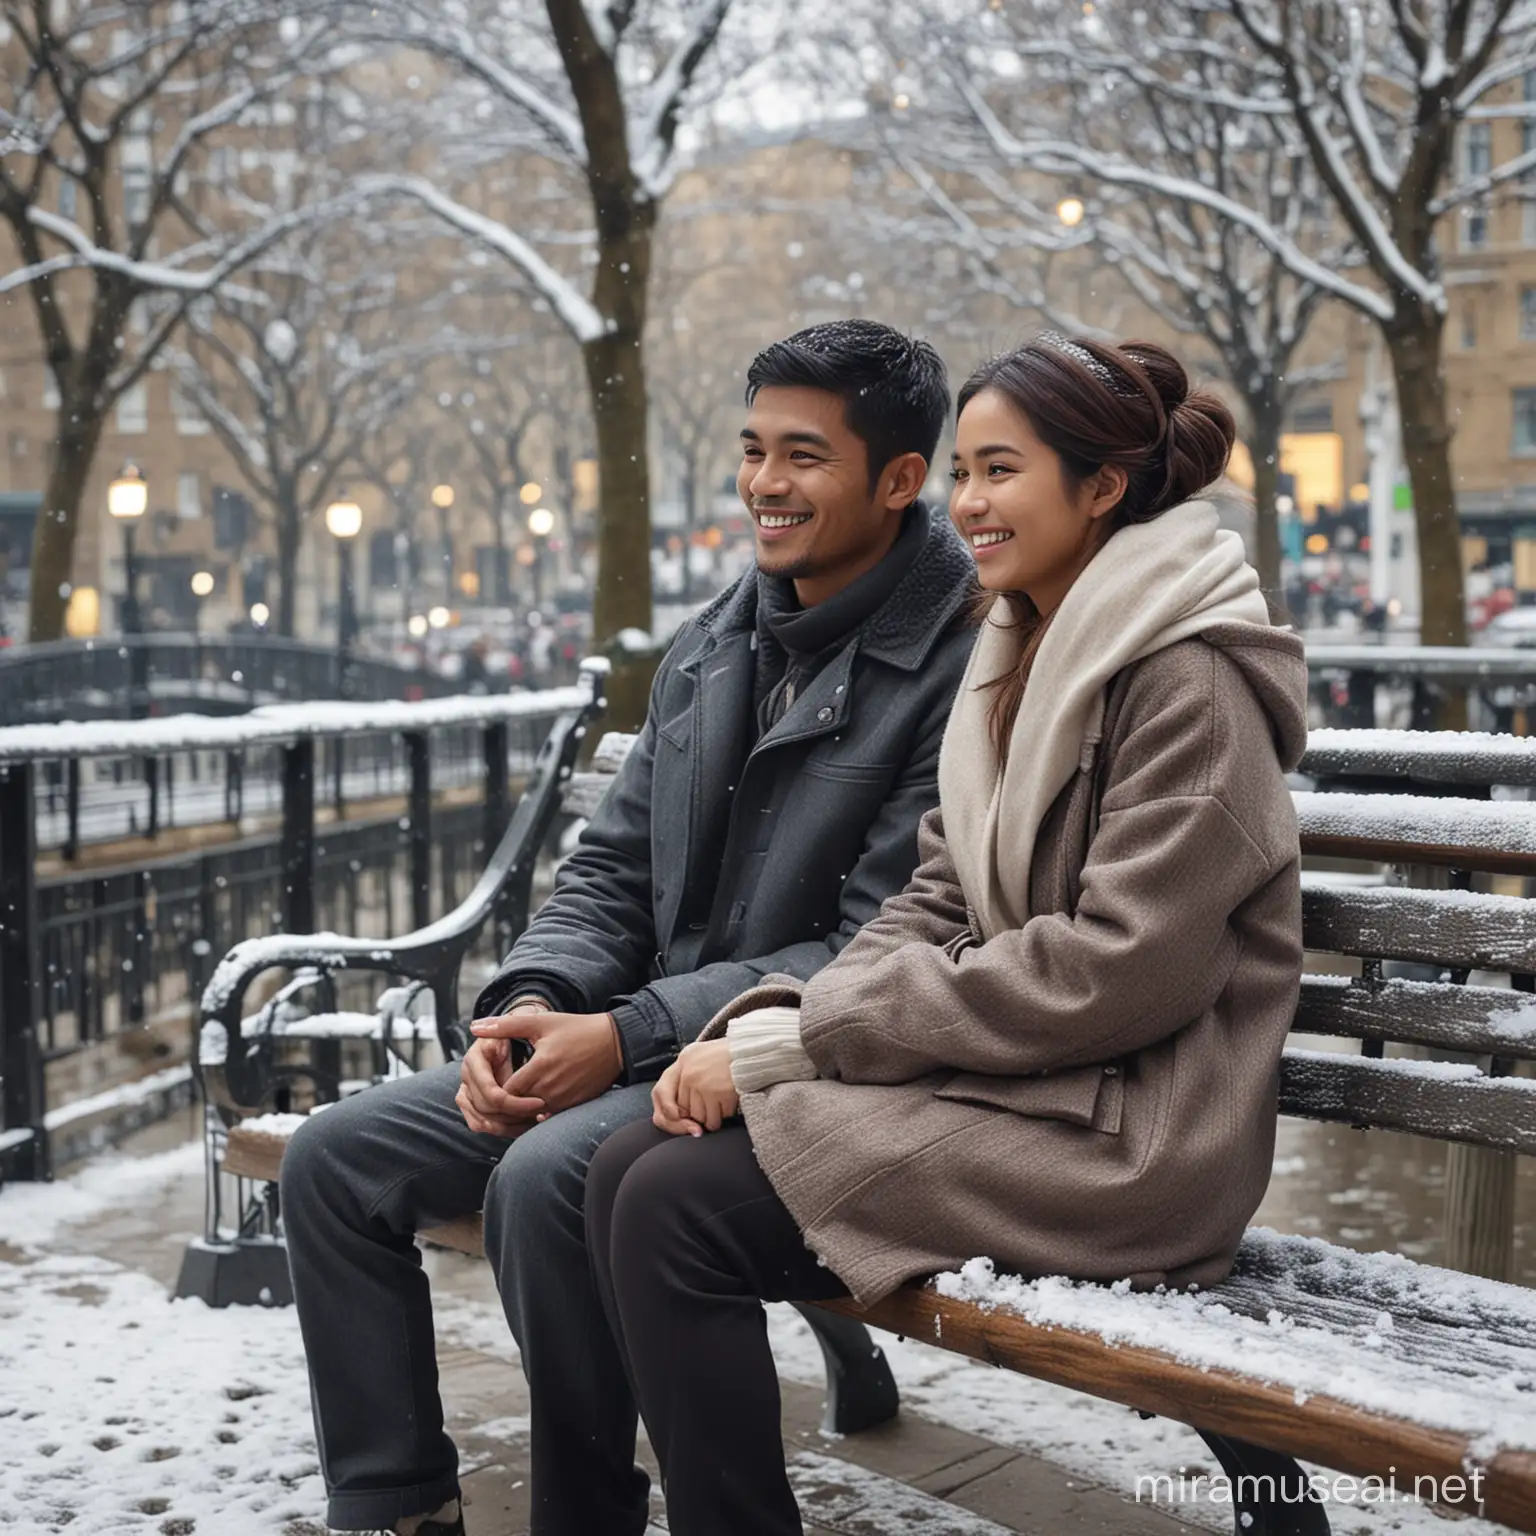 Indonesian Couple in Winter Attire Enjoying Snowy Day in London Park